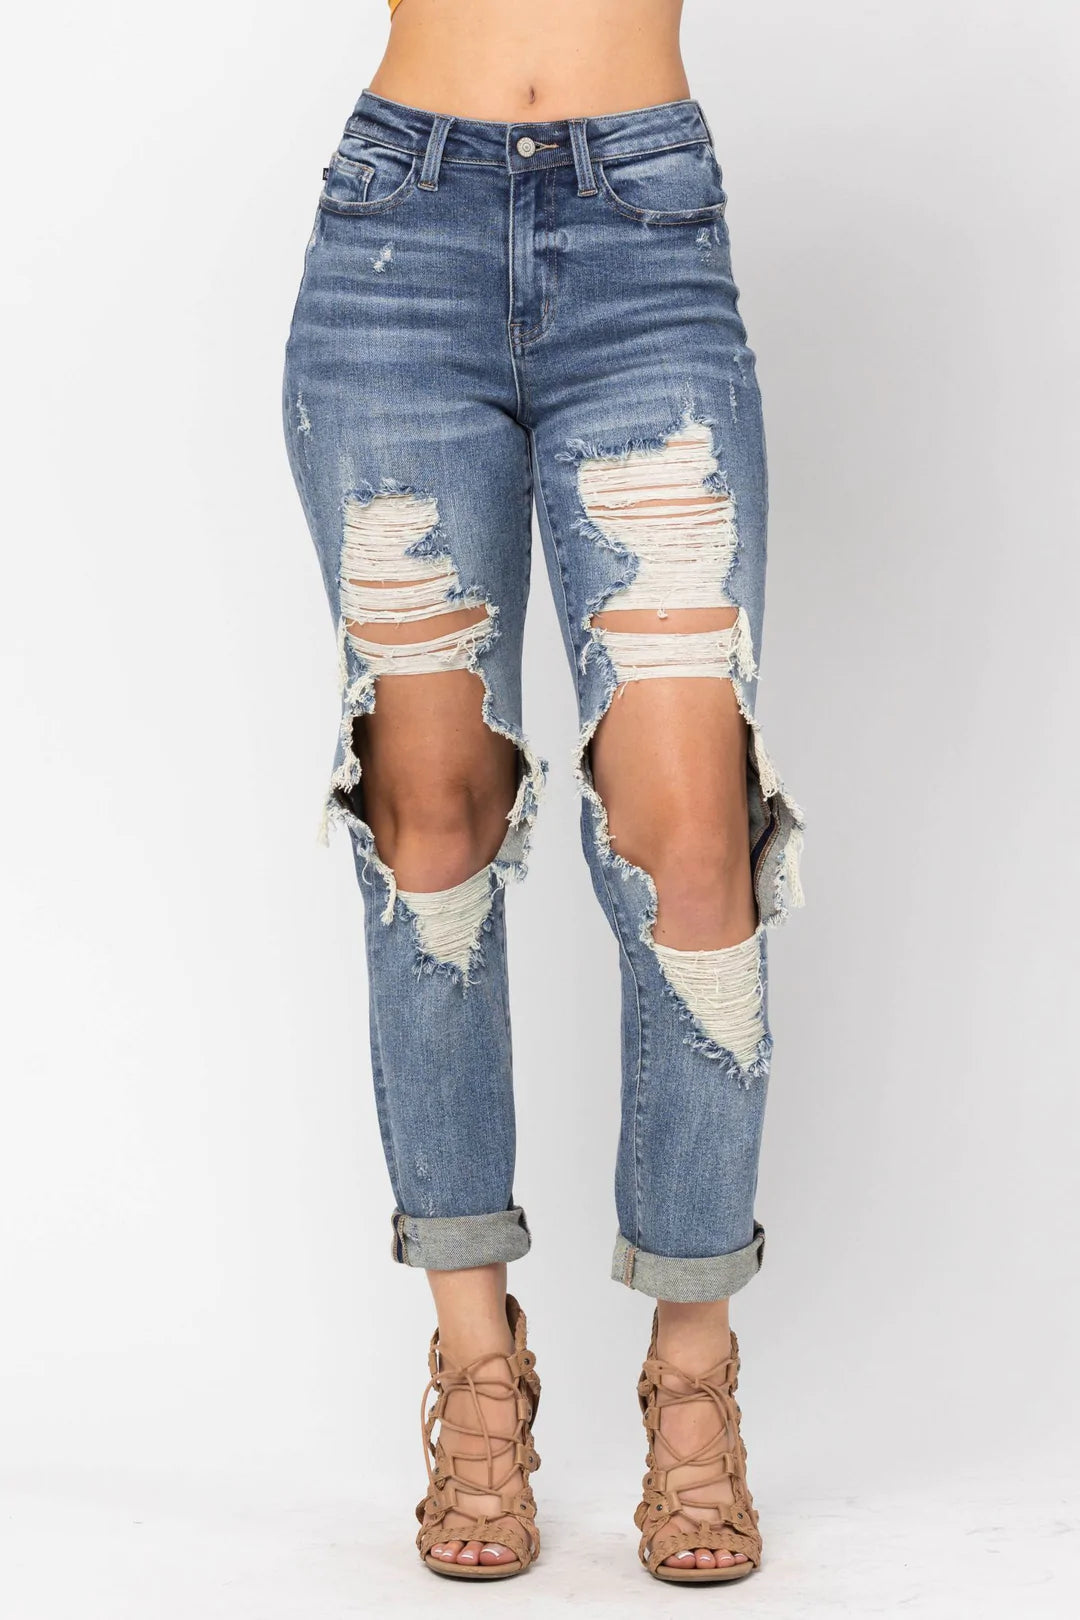 *PVM* Judy Blue Kortney Straight Leg Jeans (Medium Wash)